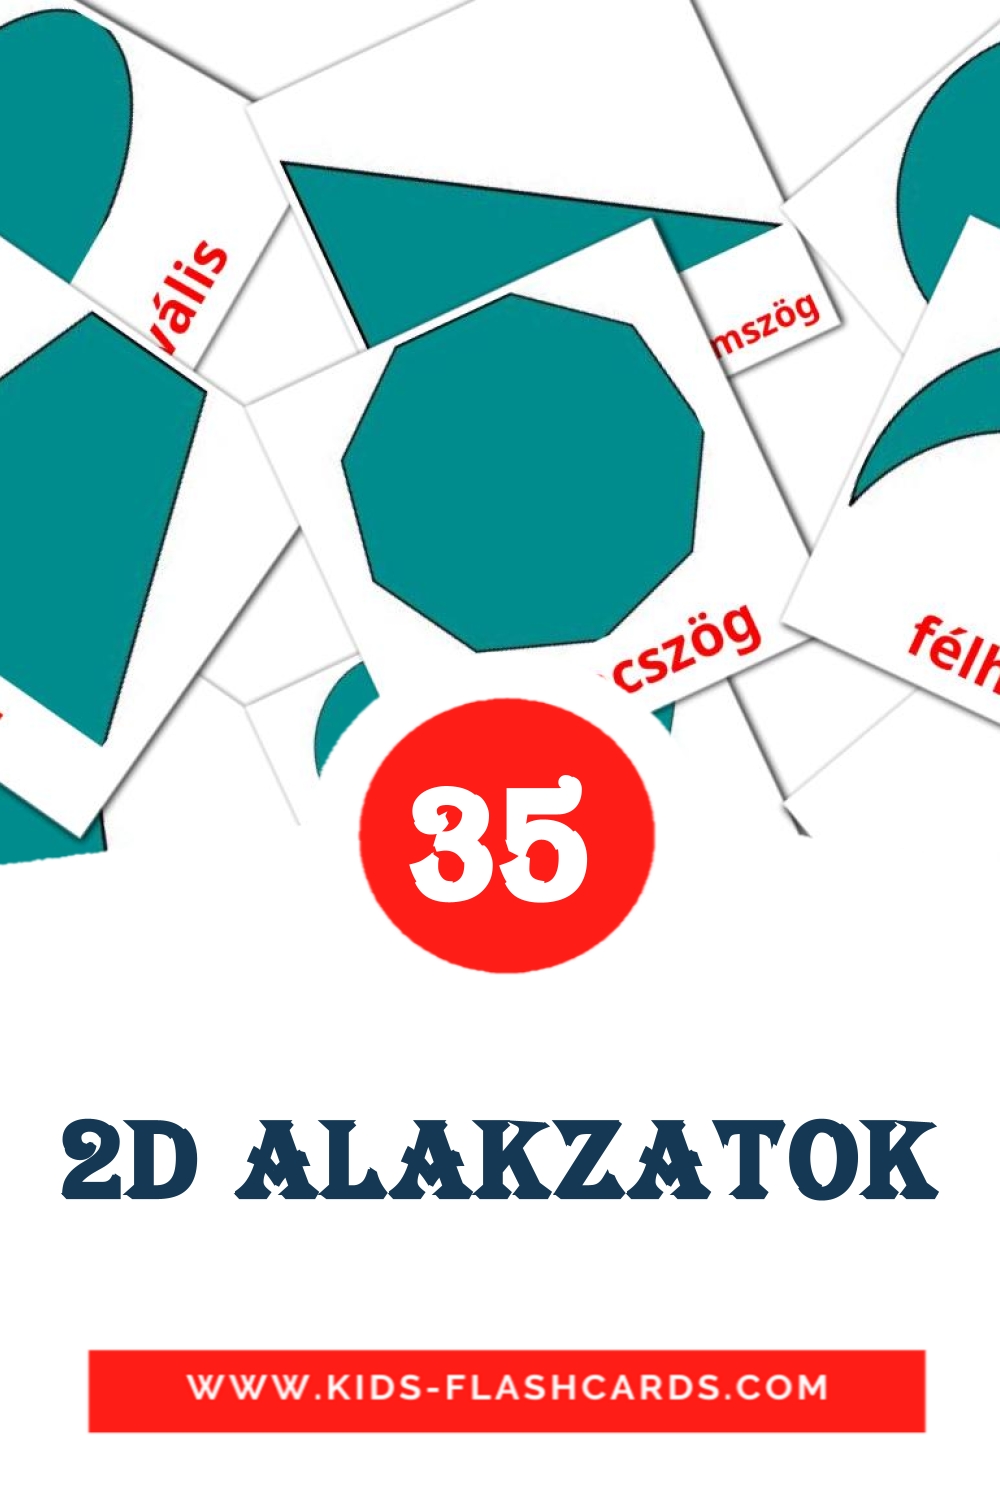 35 carte illustrate di 2D alakzatok per la scuola materna in ungherese